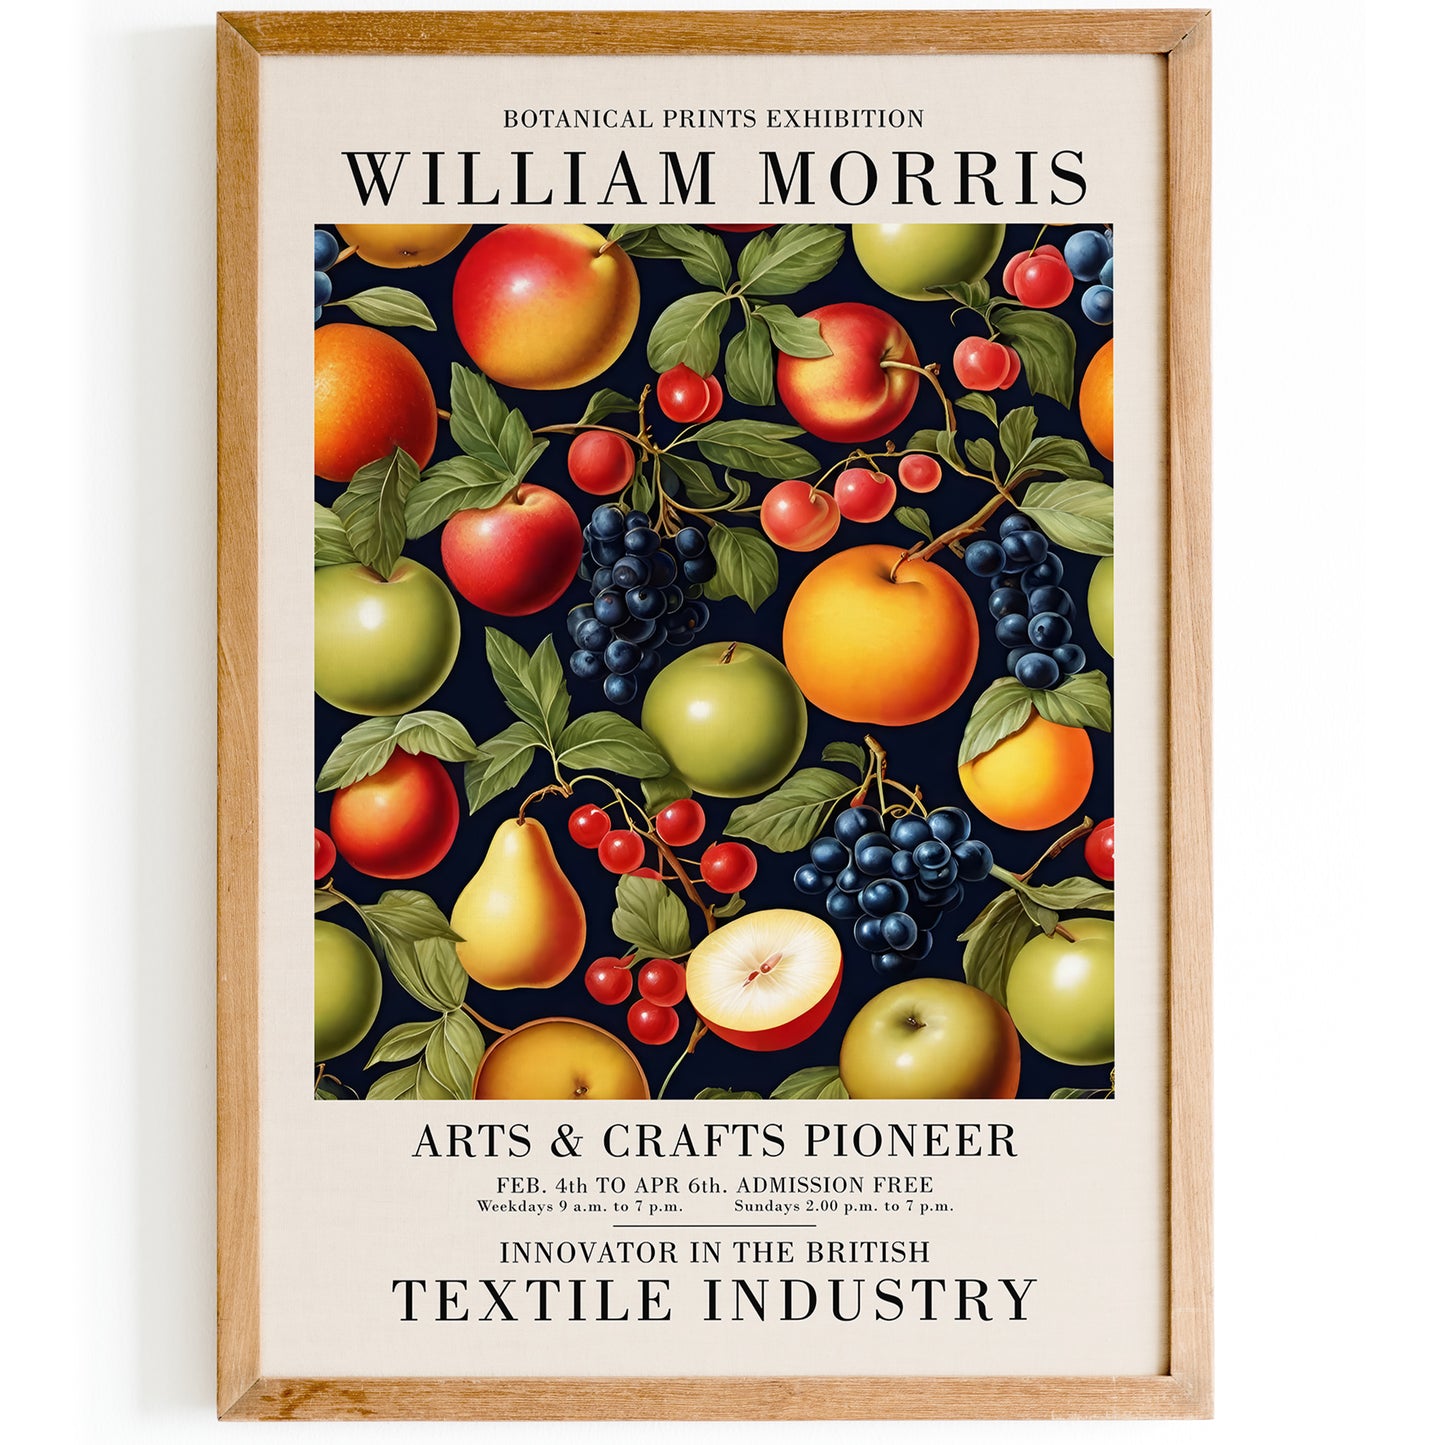 Vintage Fruit William Morris Poster